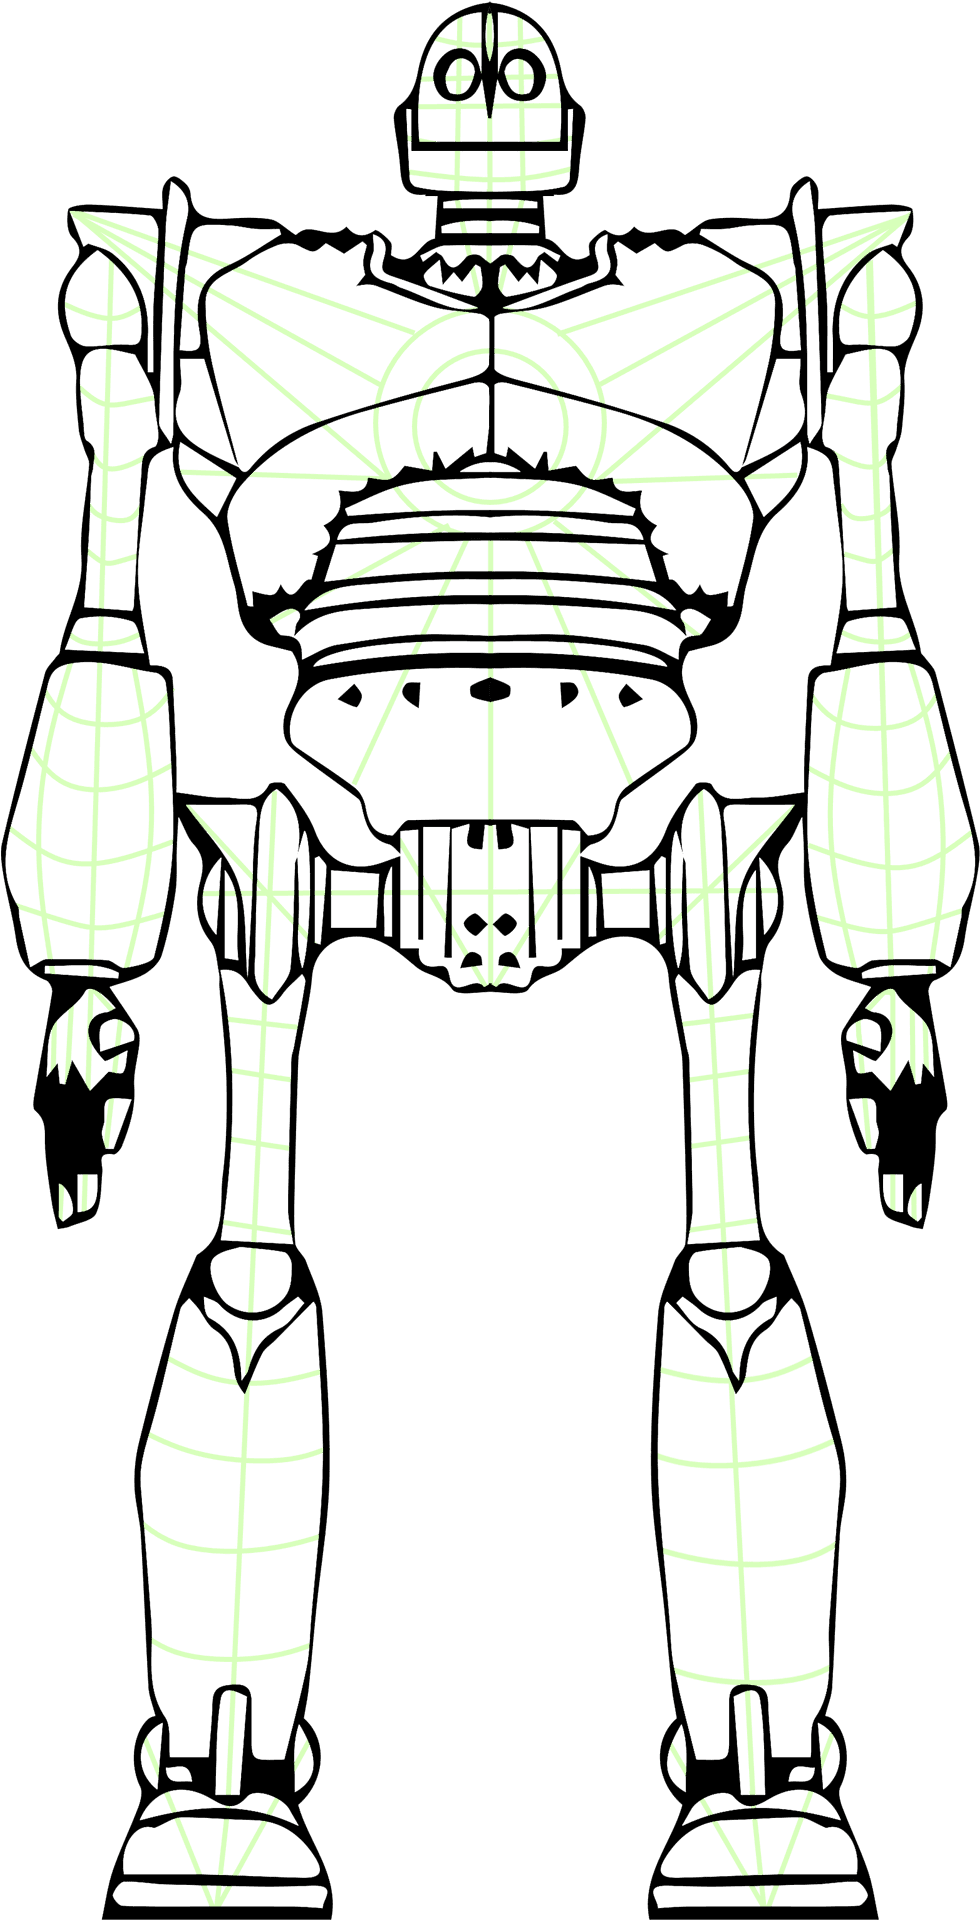 Wireframe Robot Design PNG image